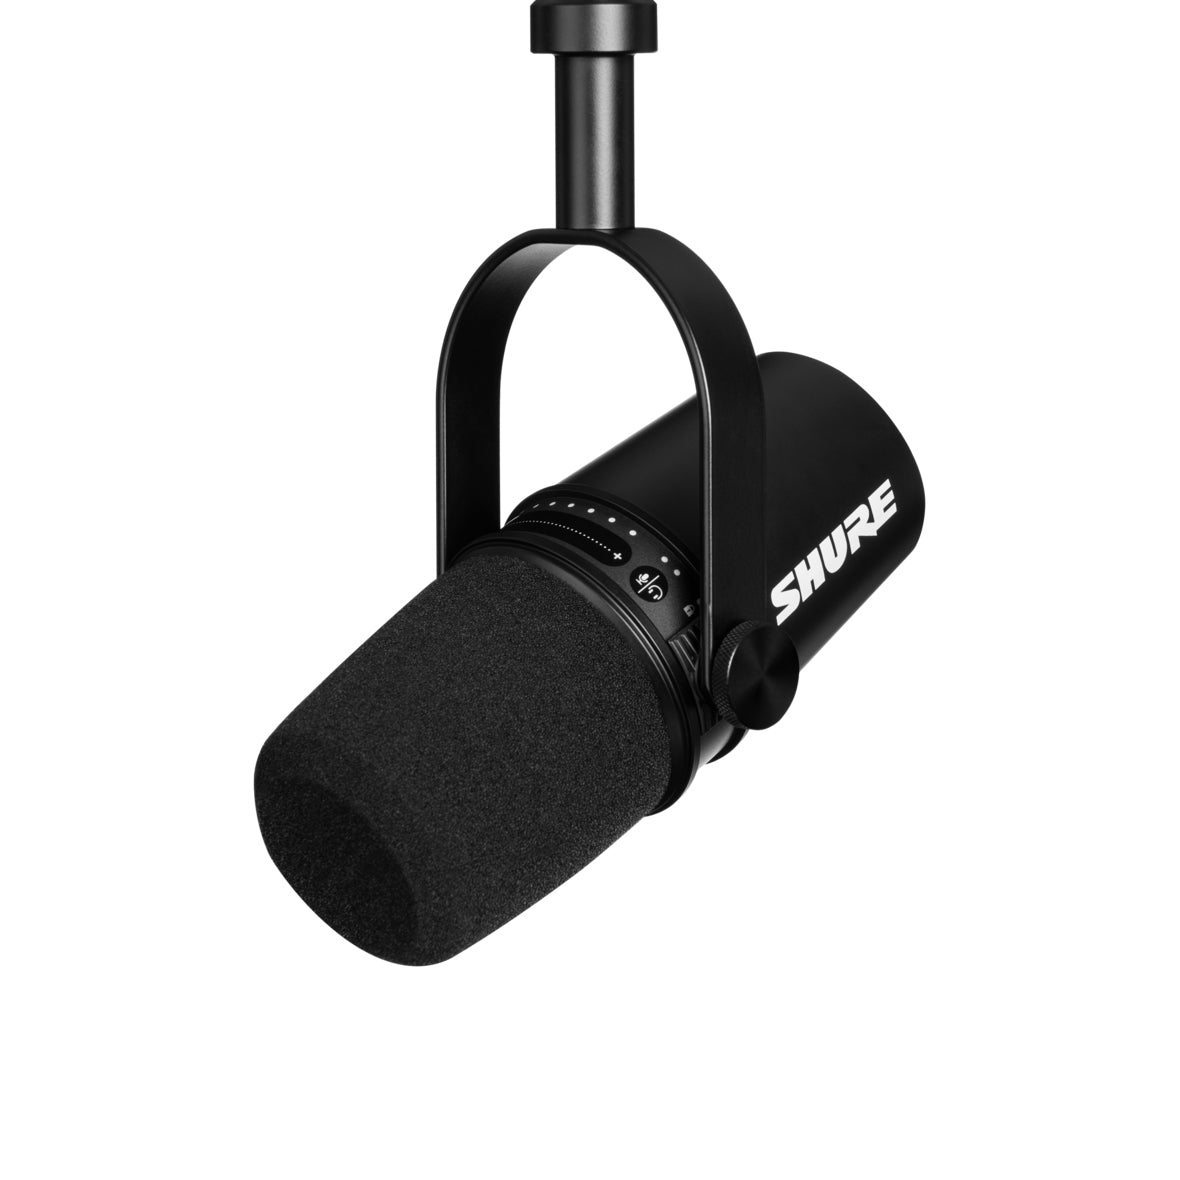 Shure MV7 Podcast USB Microphone Black